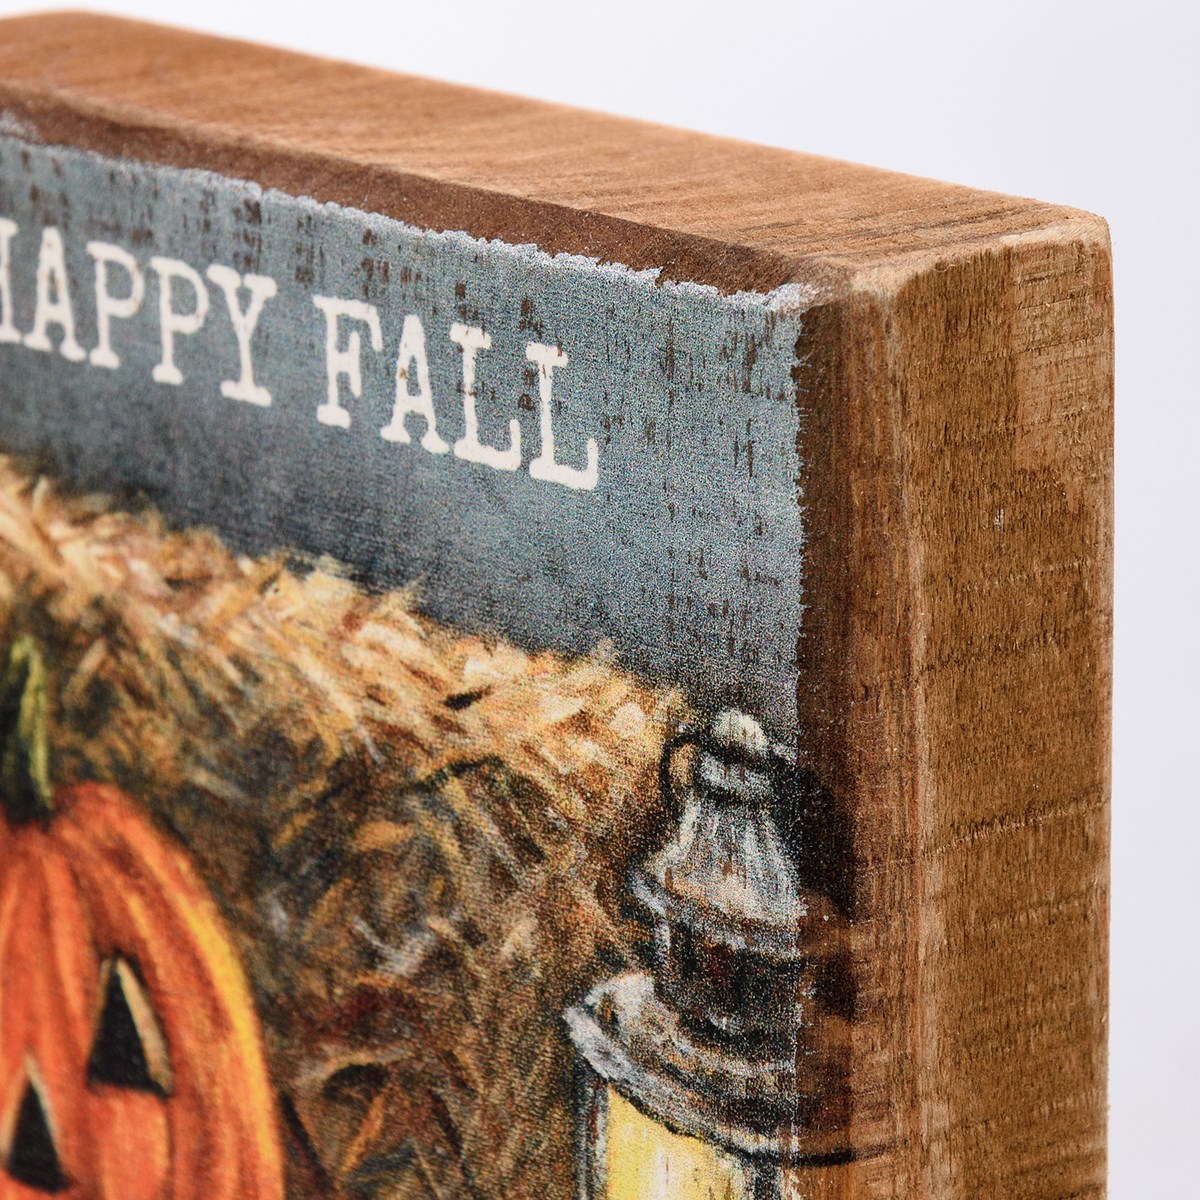 Happy Fall Block Sign - Wood